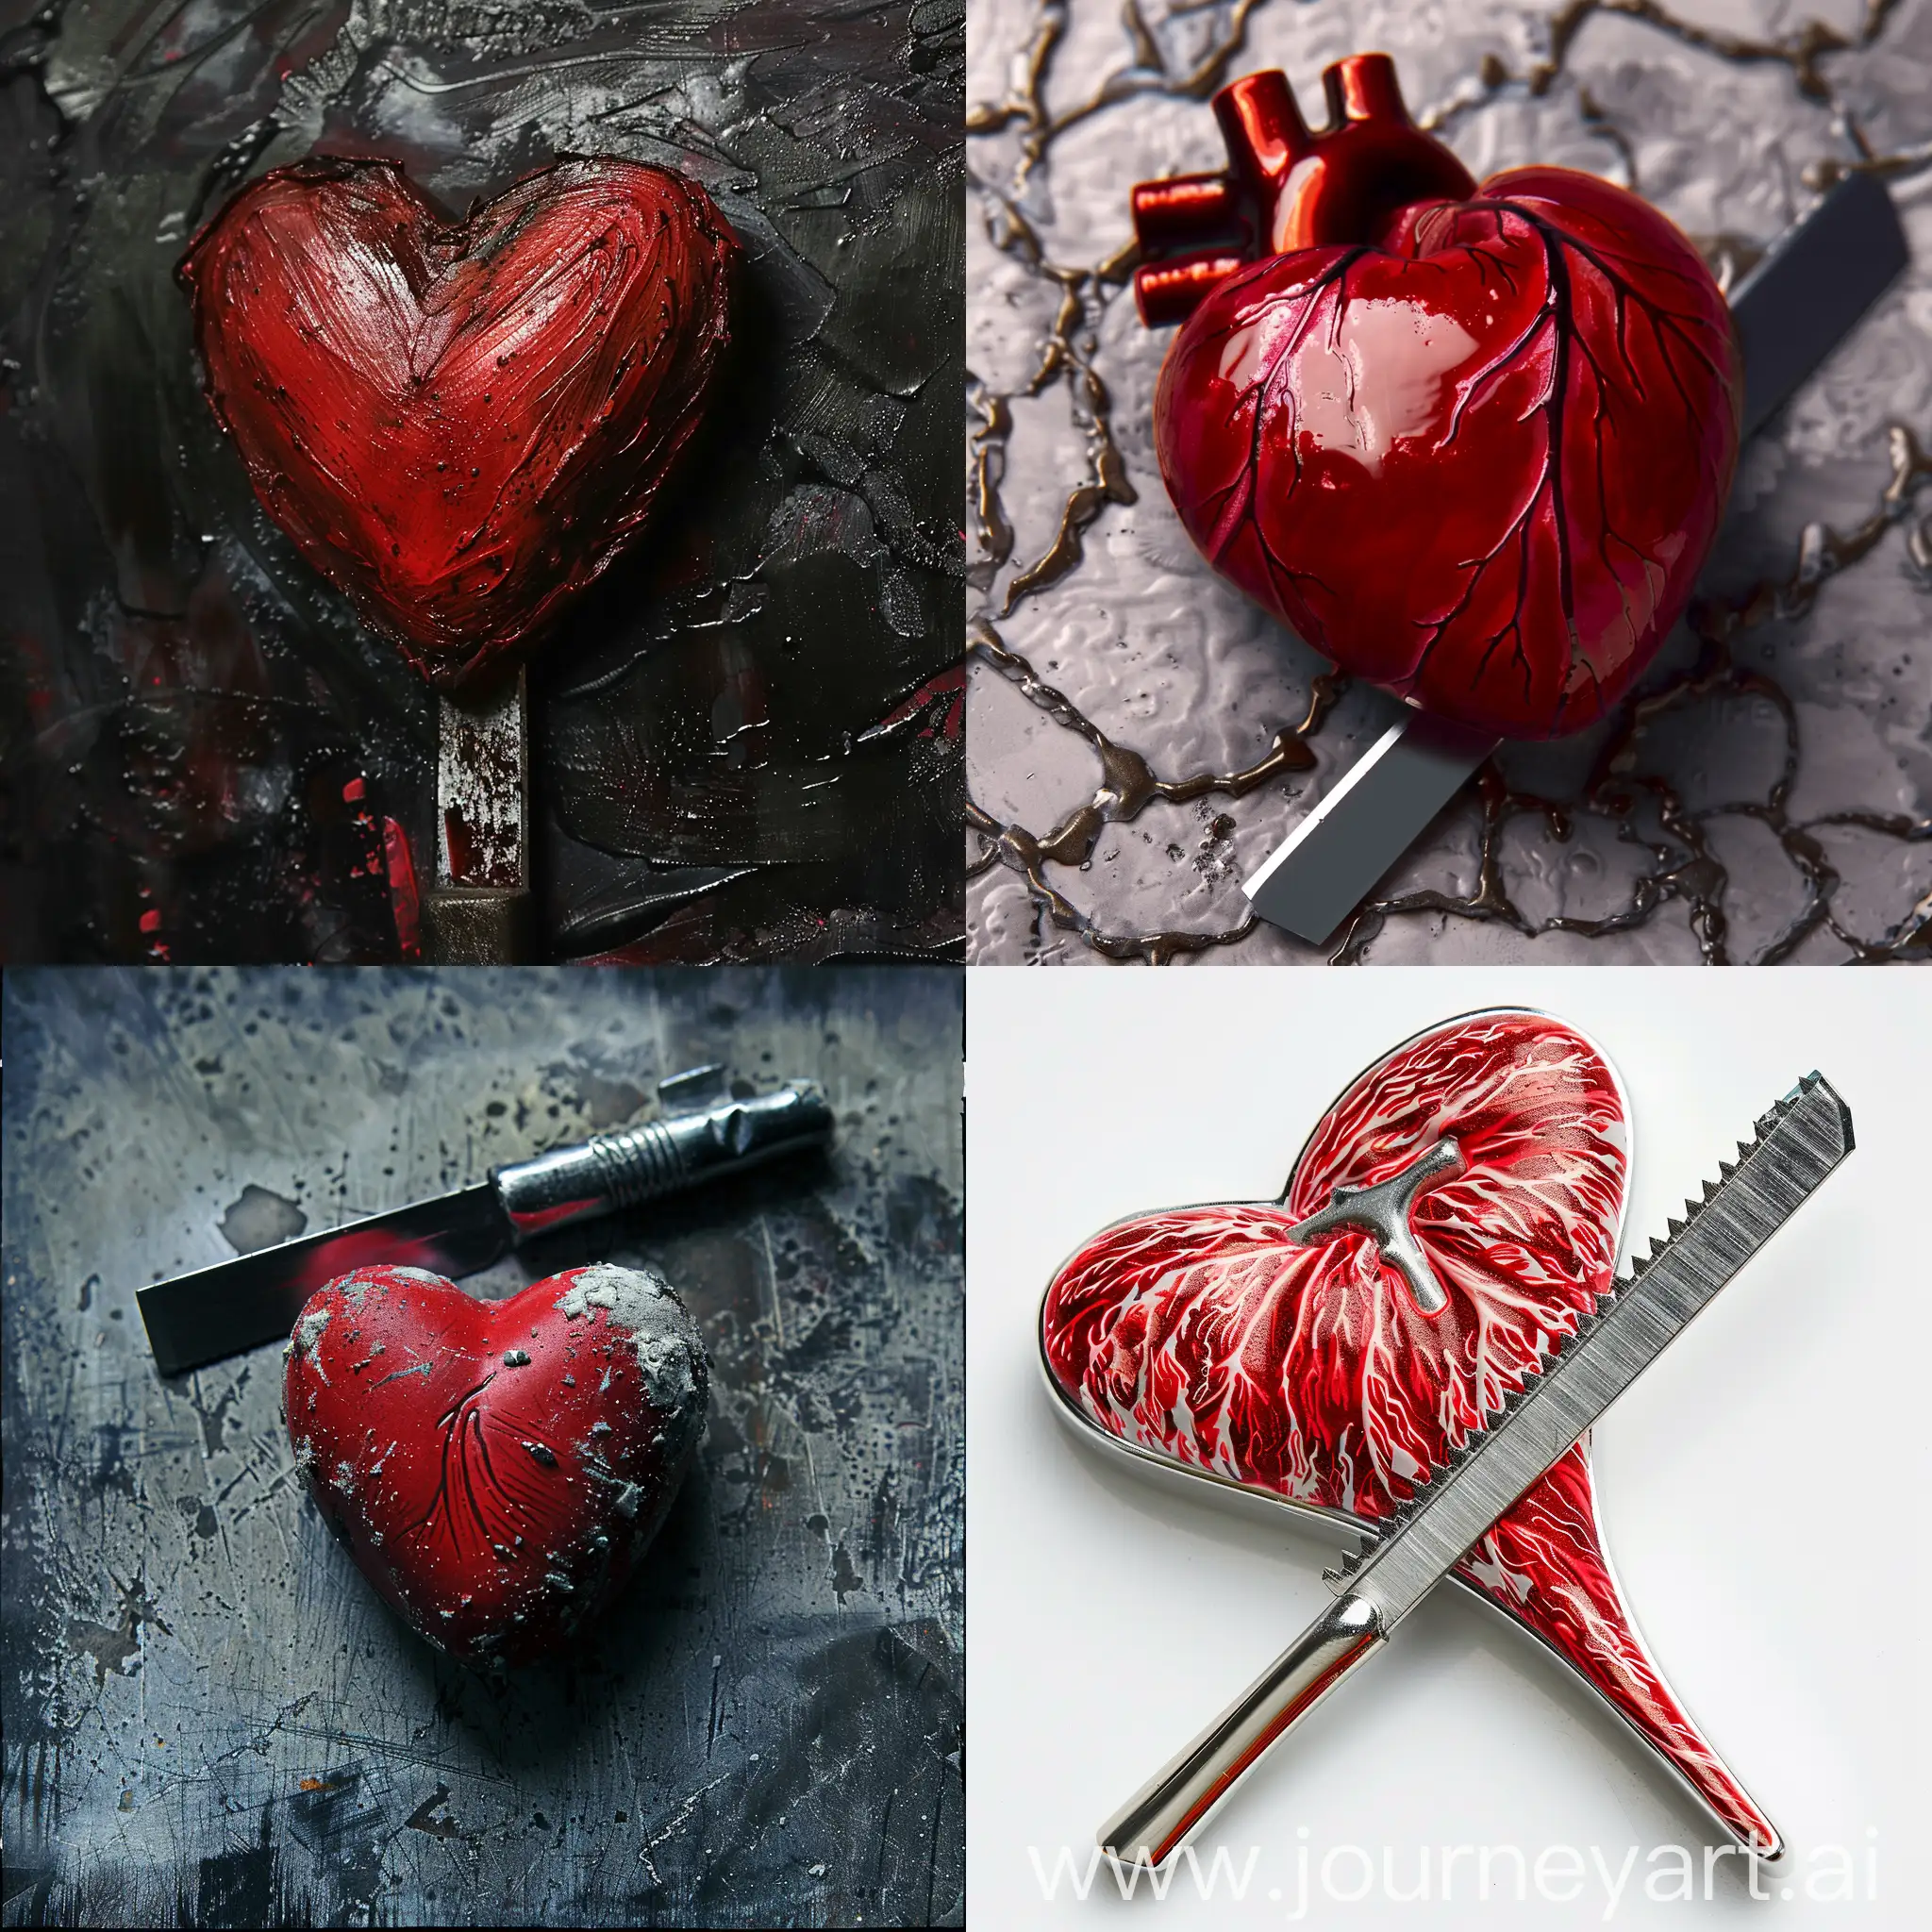 razor blade in heart